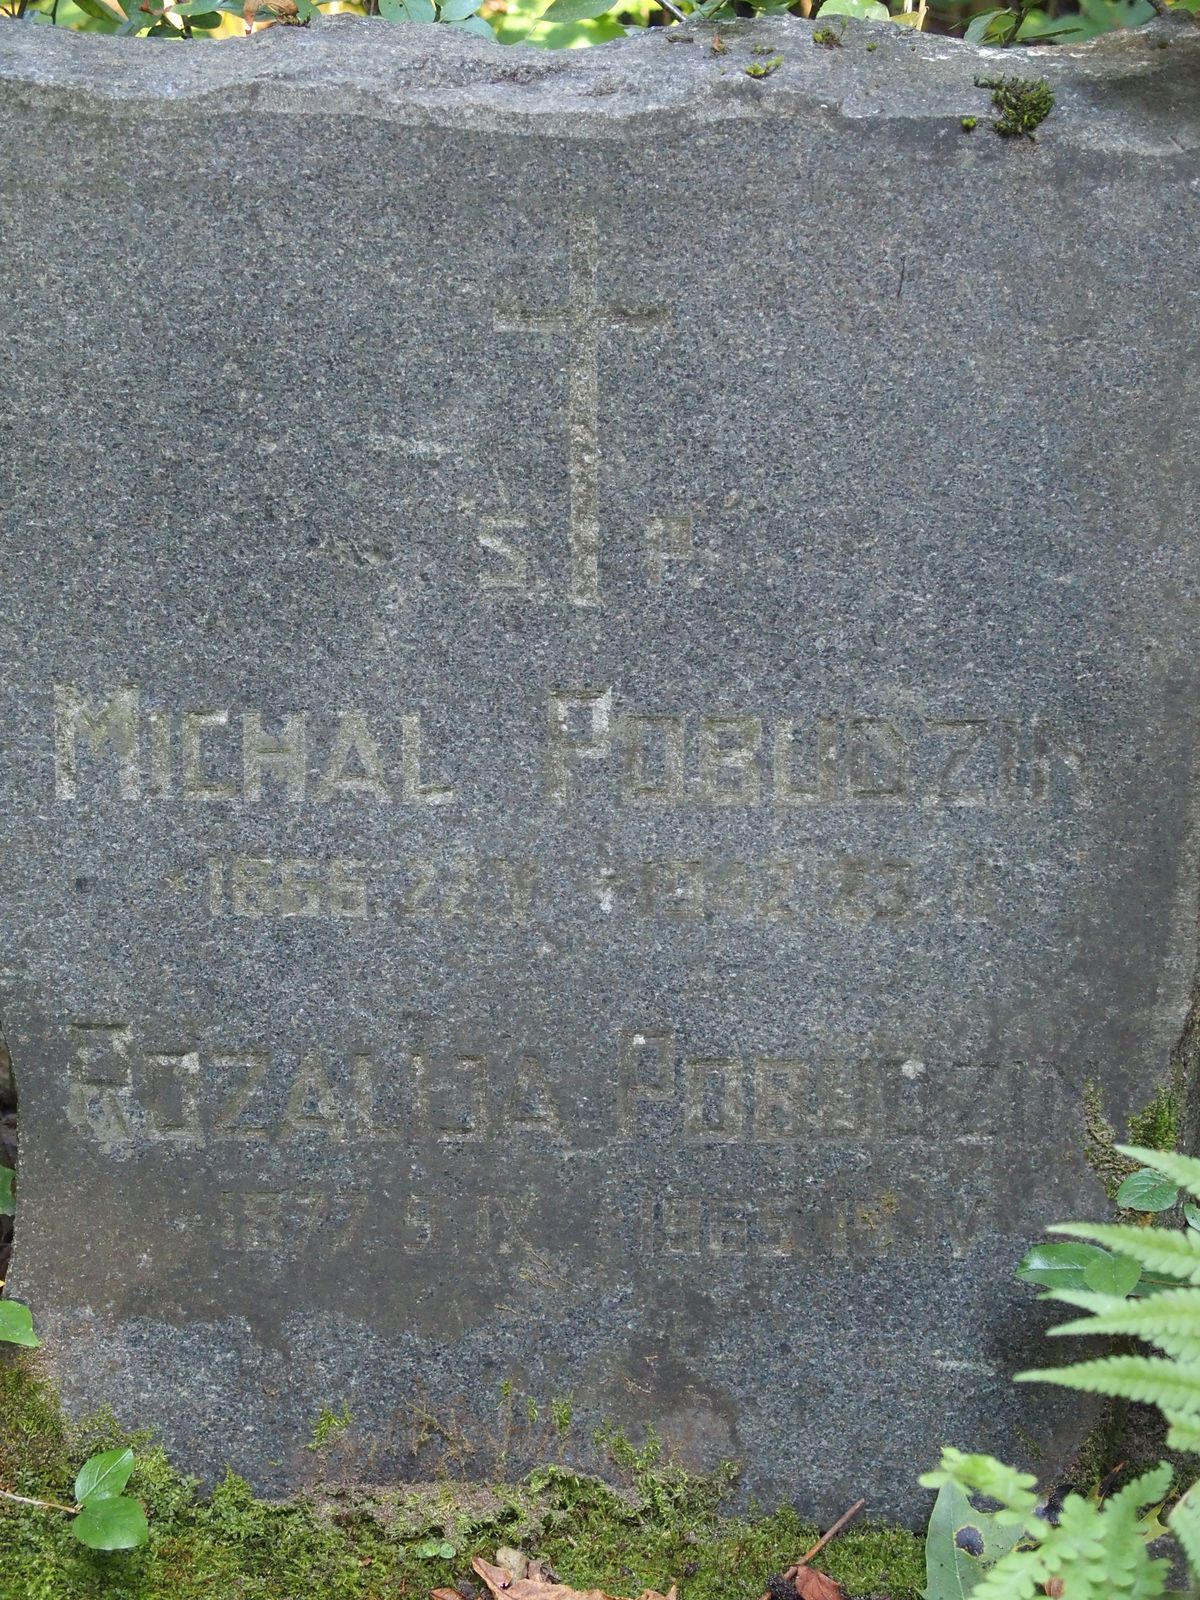 Inscription from the gravestone of Michael Pobudzin and Rozalia Pobudzin, St Michael's cemetery in Riga, as of 2021.